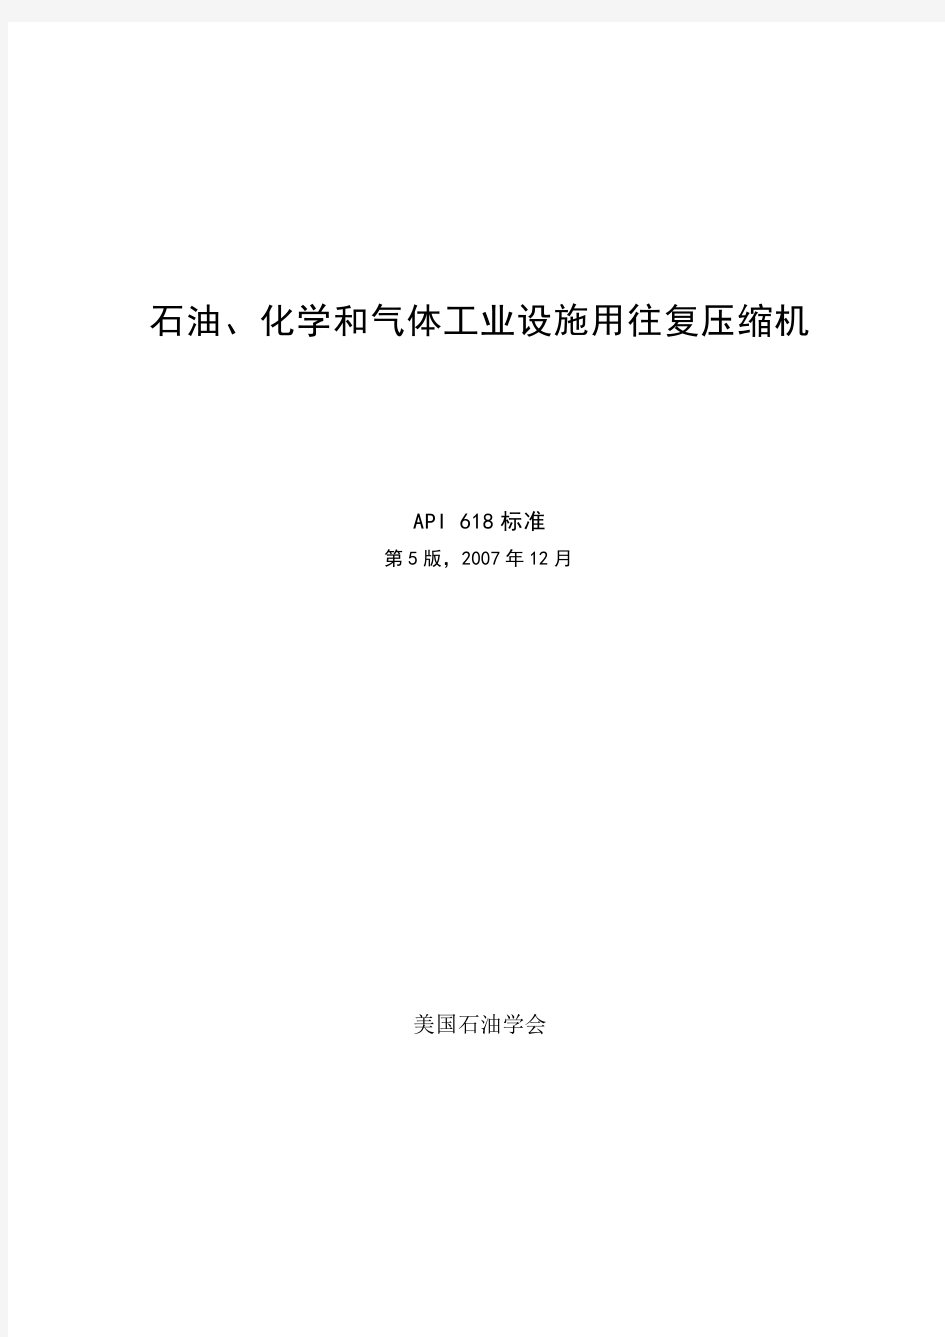 API-618-2007-石油化工和天然气工业用往复式压缩机(5th中文版)